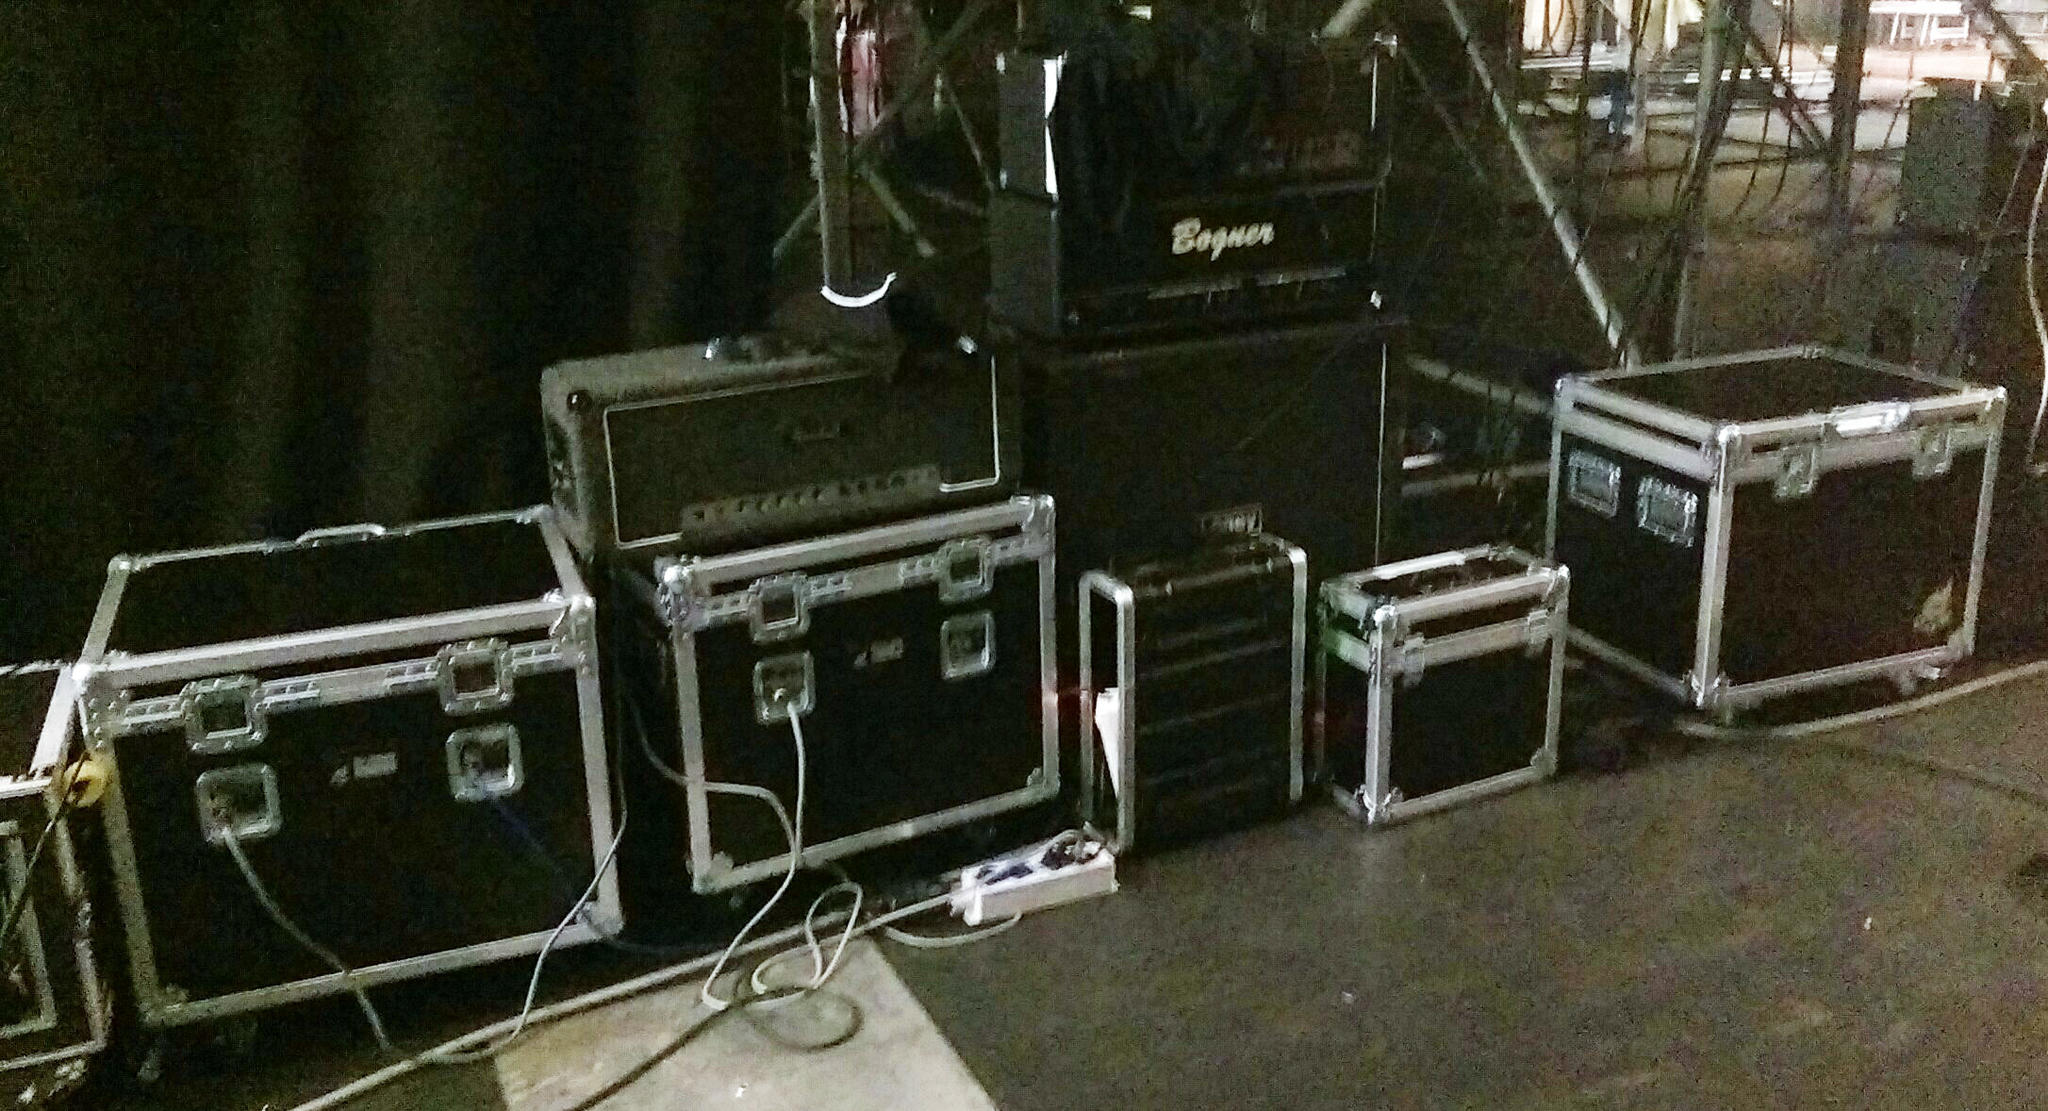 Box of Doom units backstage